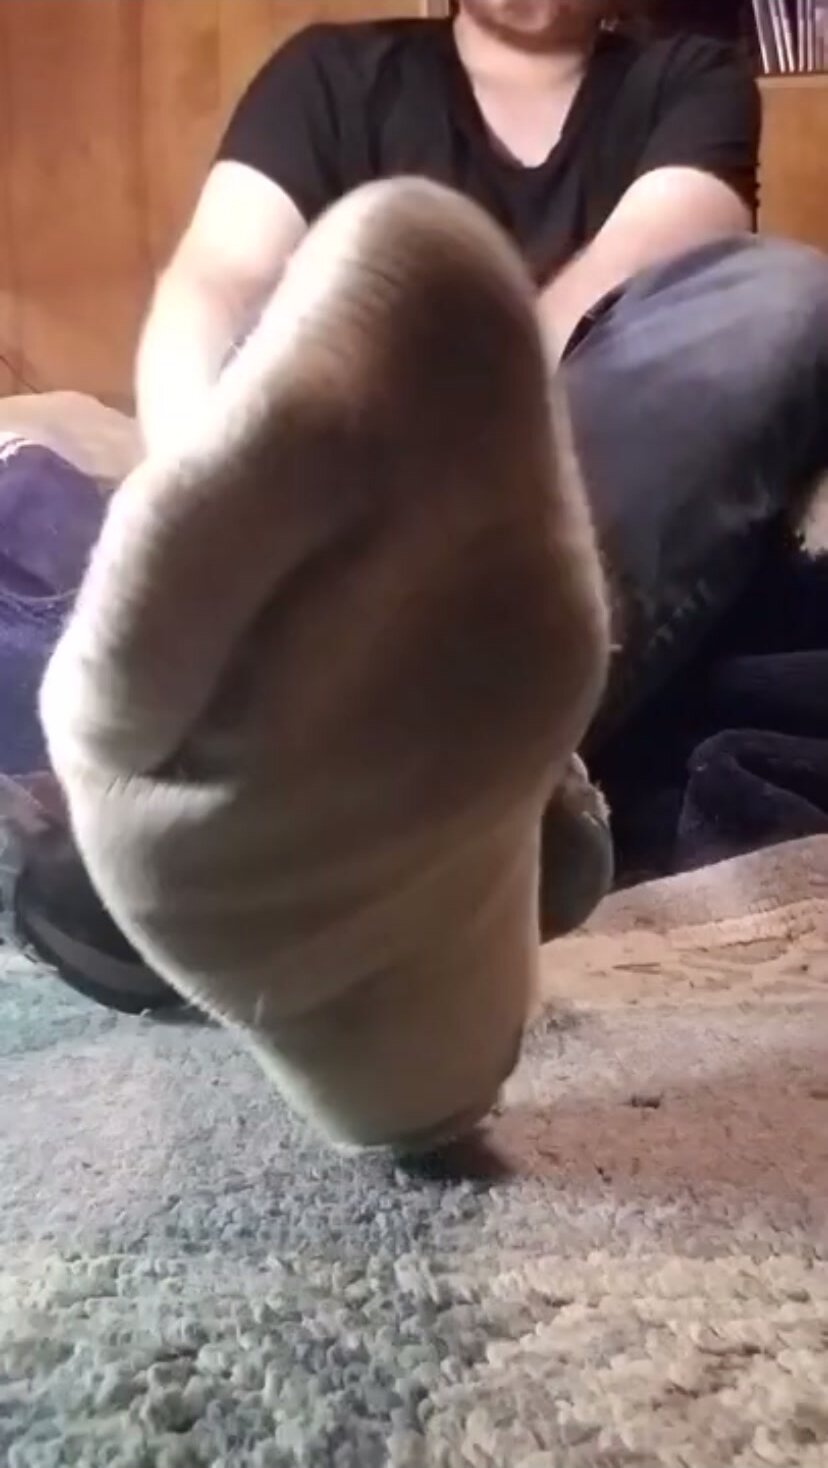 Chubby Guy Smelly Socks and Feet